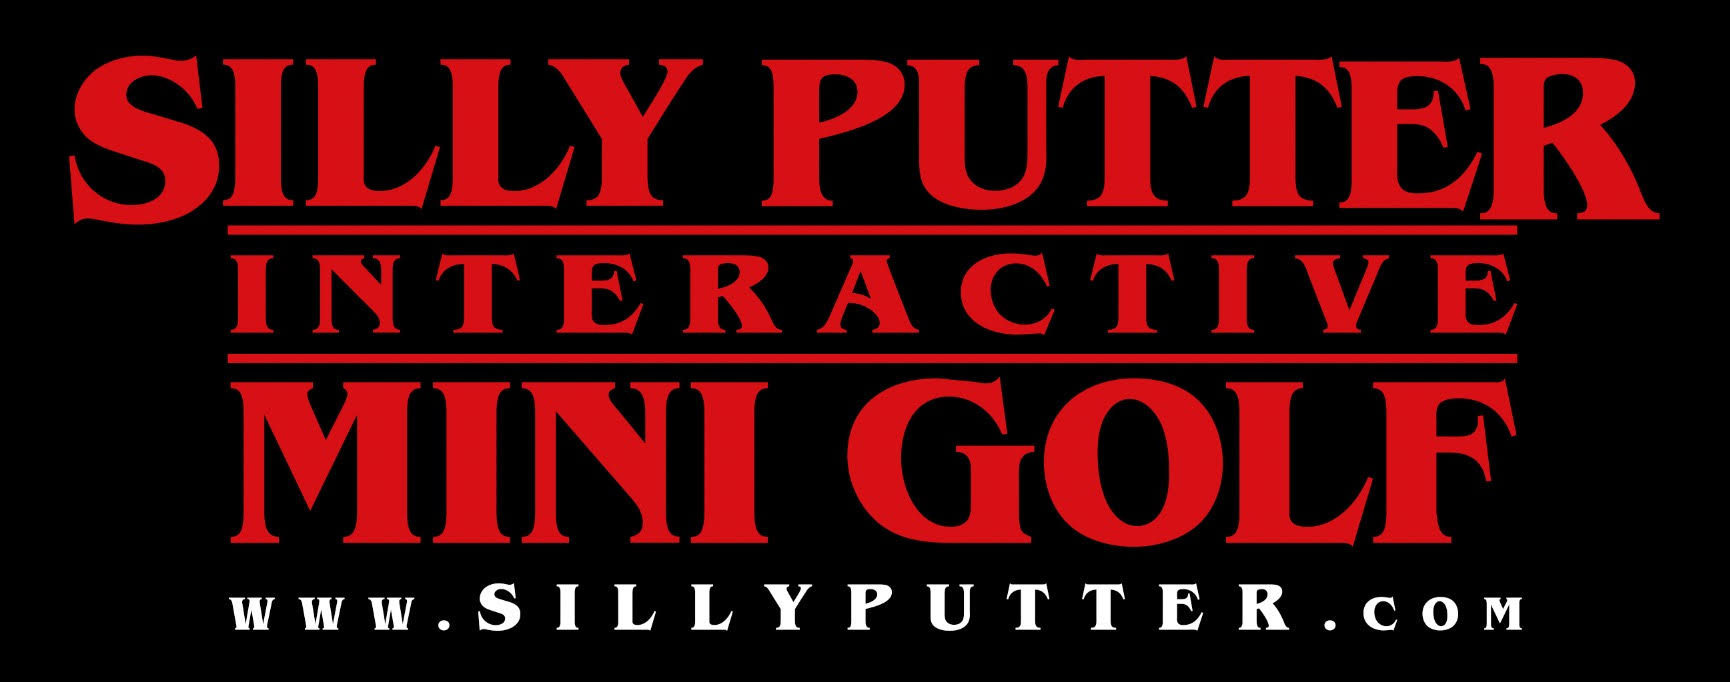 silly putter mini golf